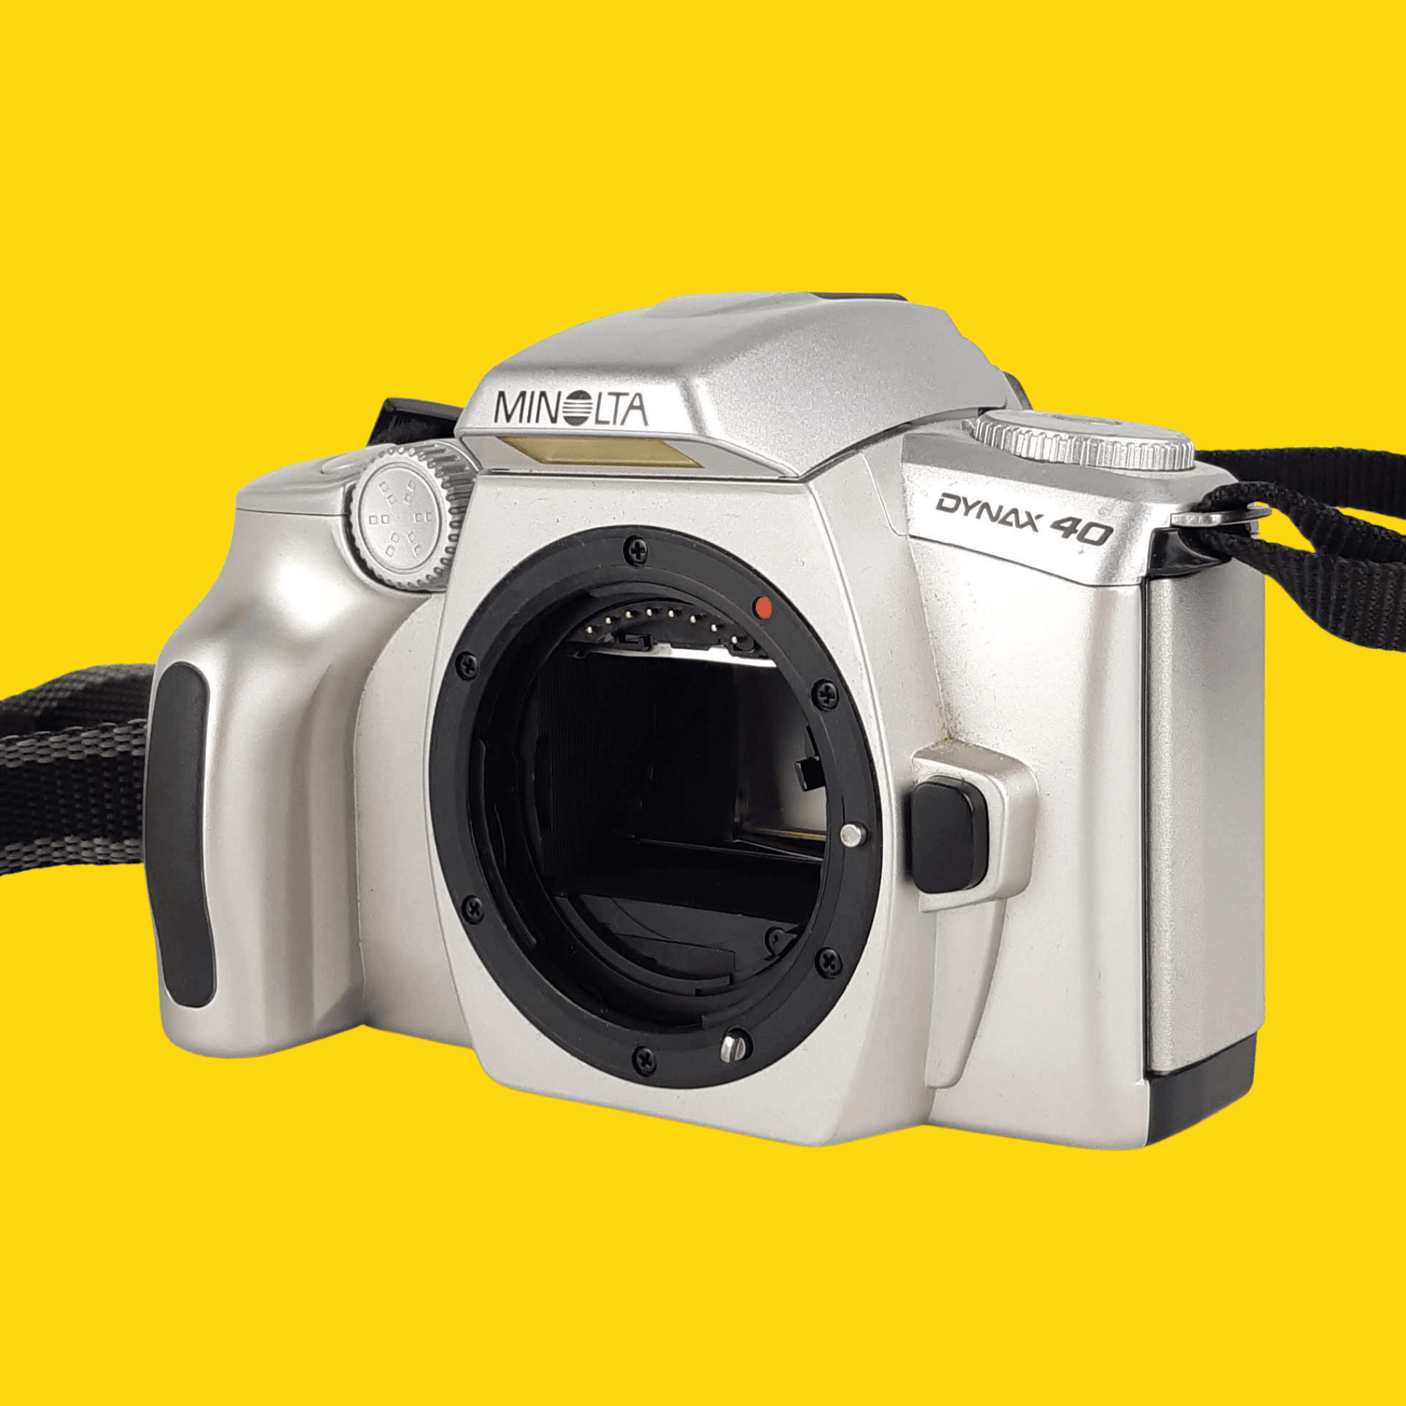 Minolta Dynax 40 Automatic 35mm SLR Film Camera - Body Only